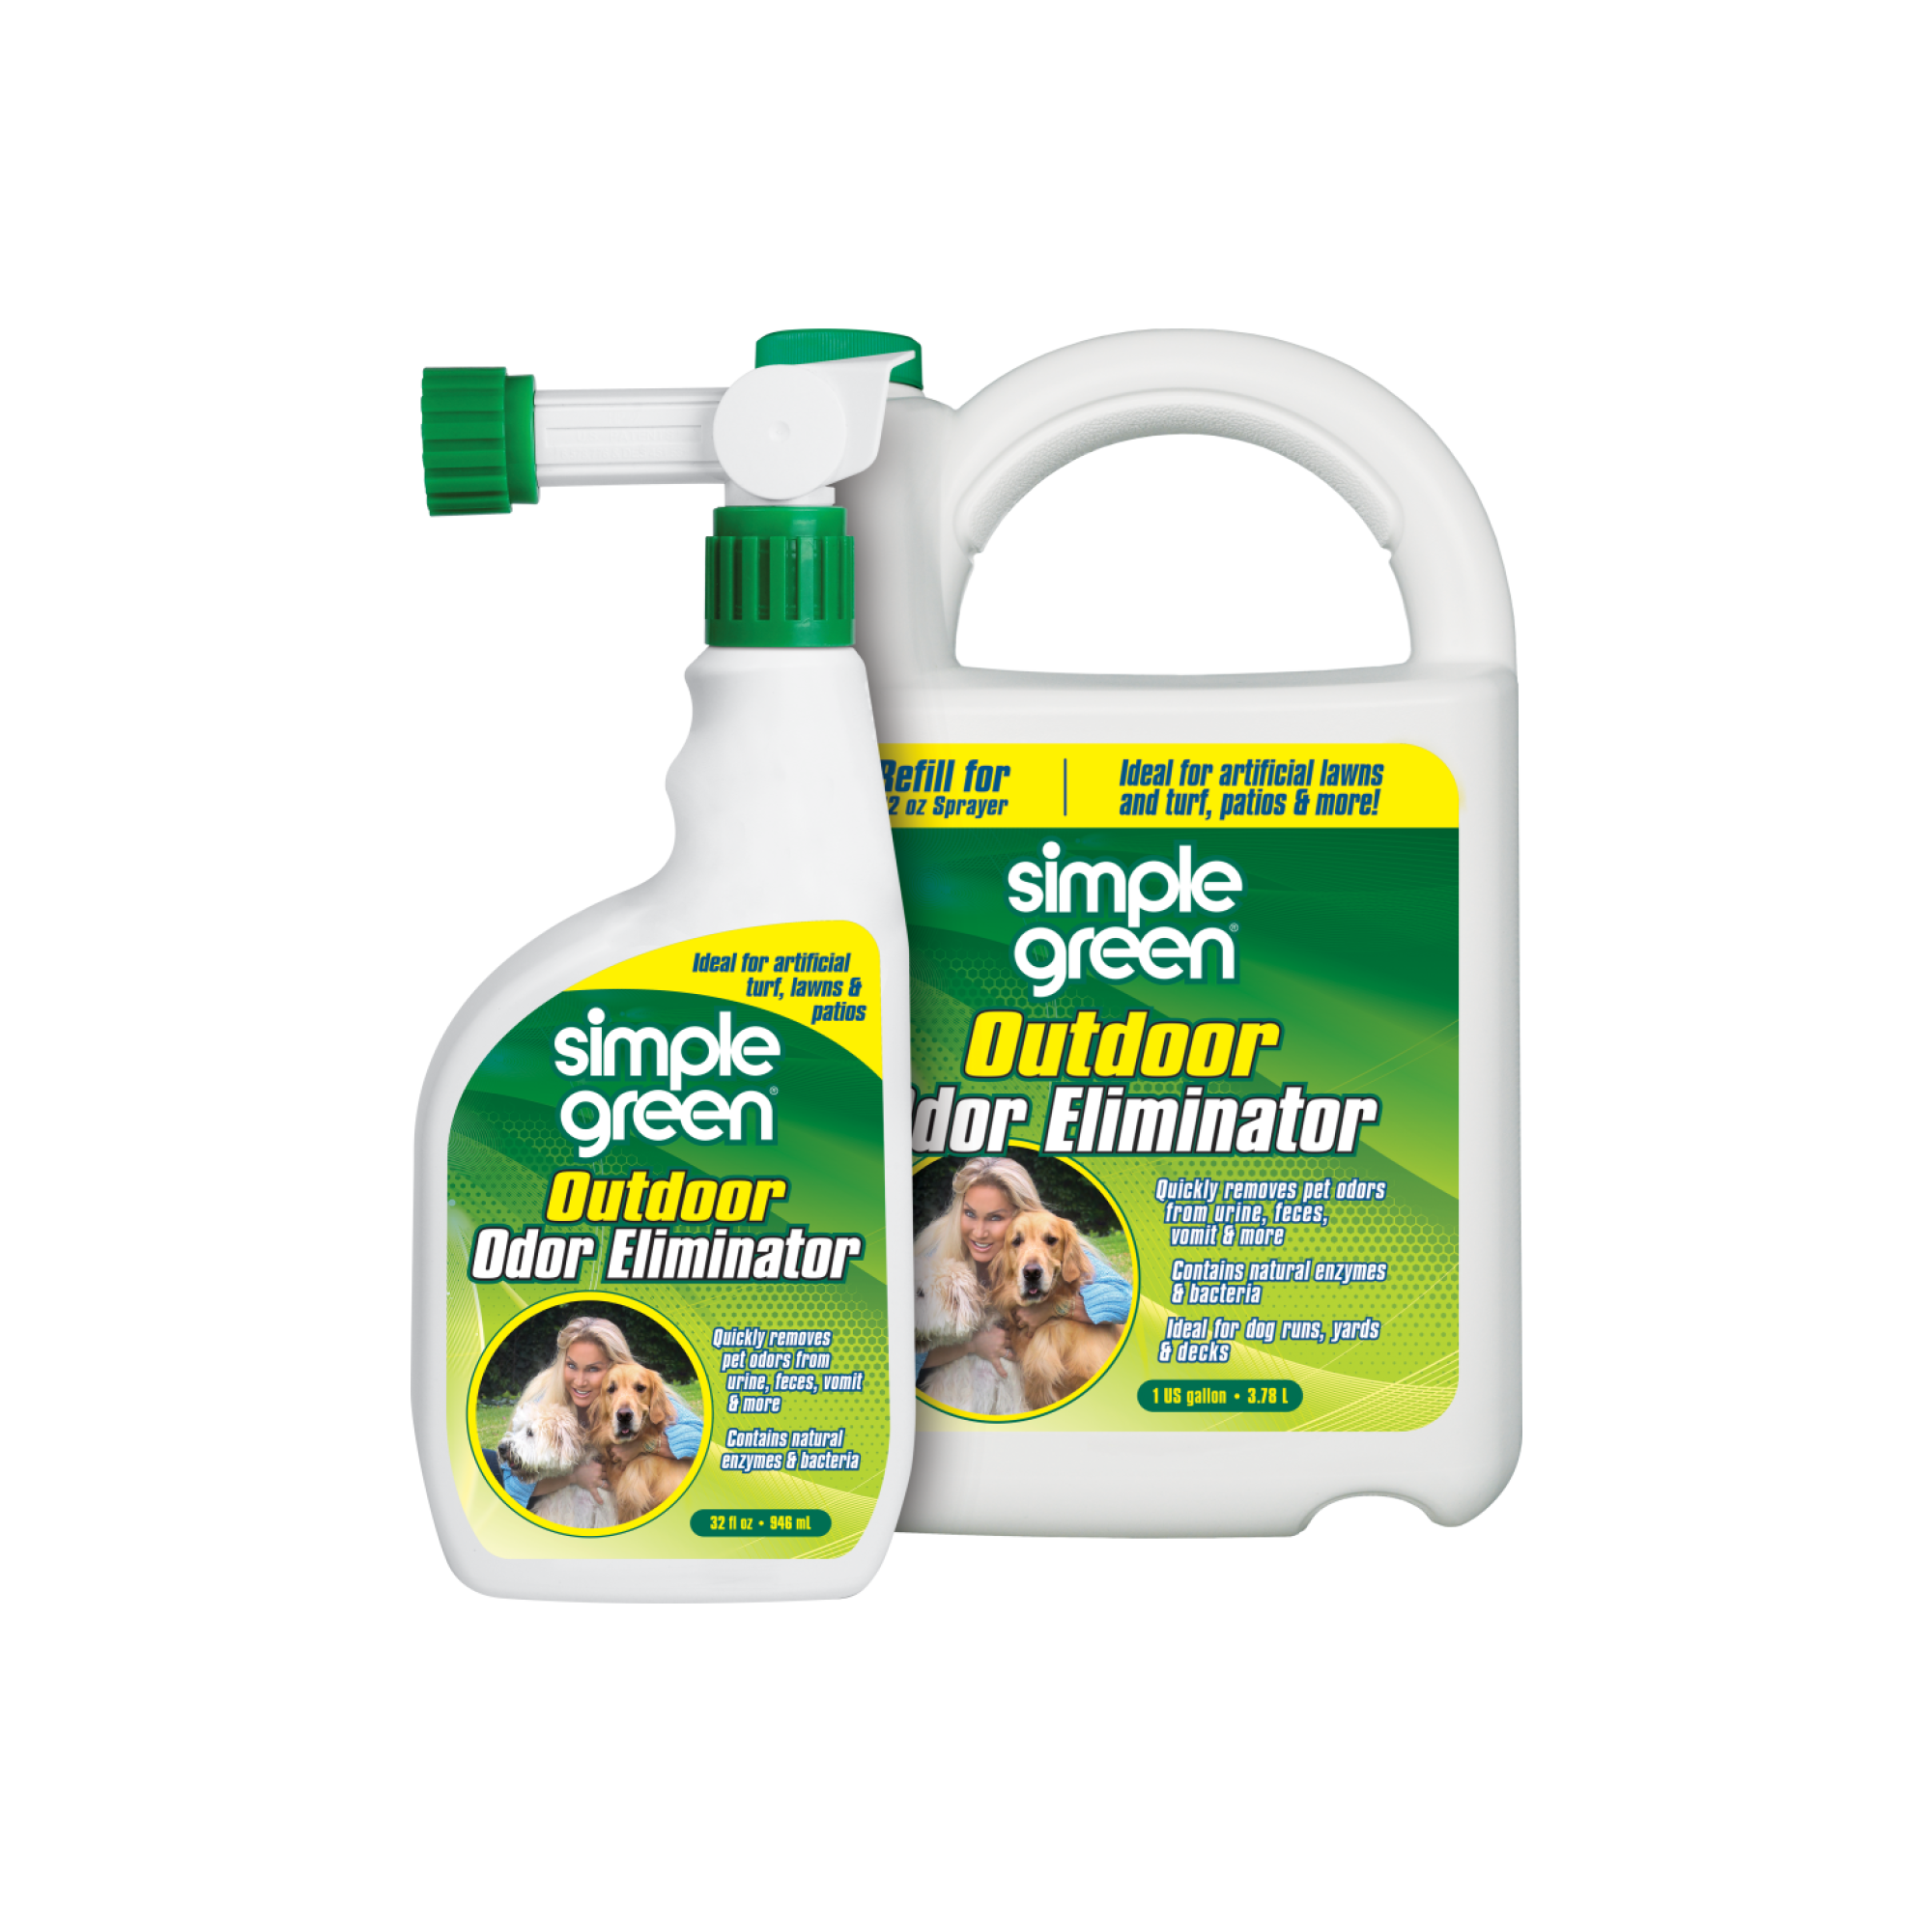 Simple Green® Outdoor Odor Eliminator